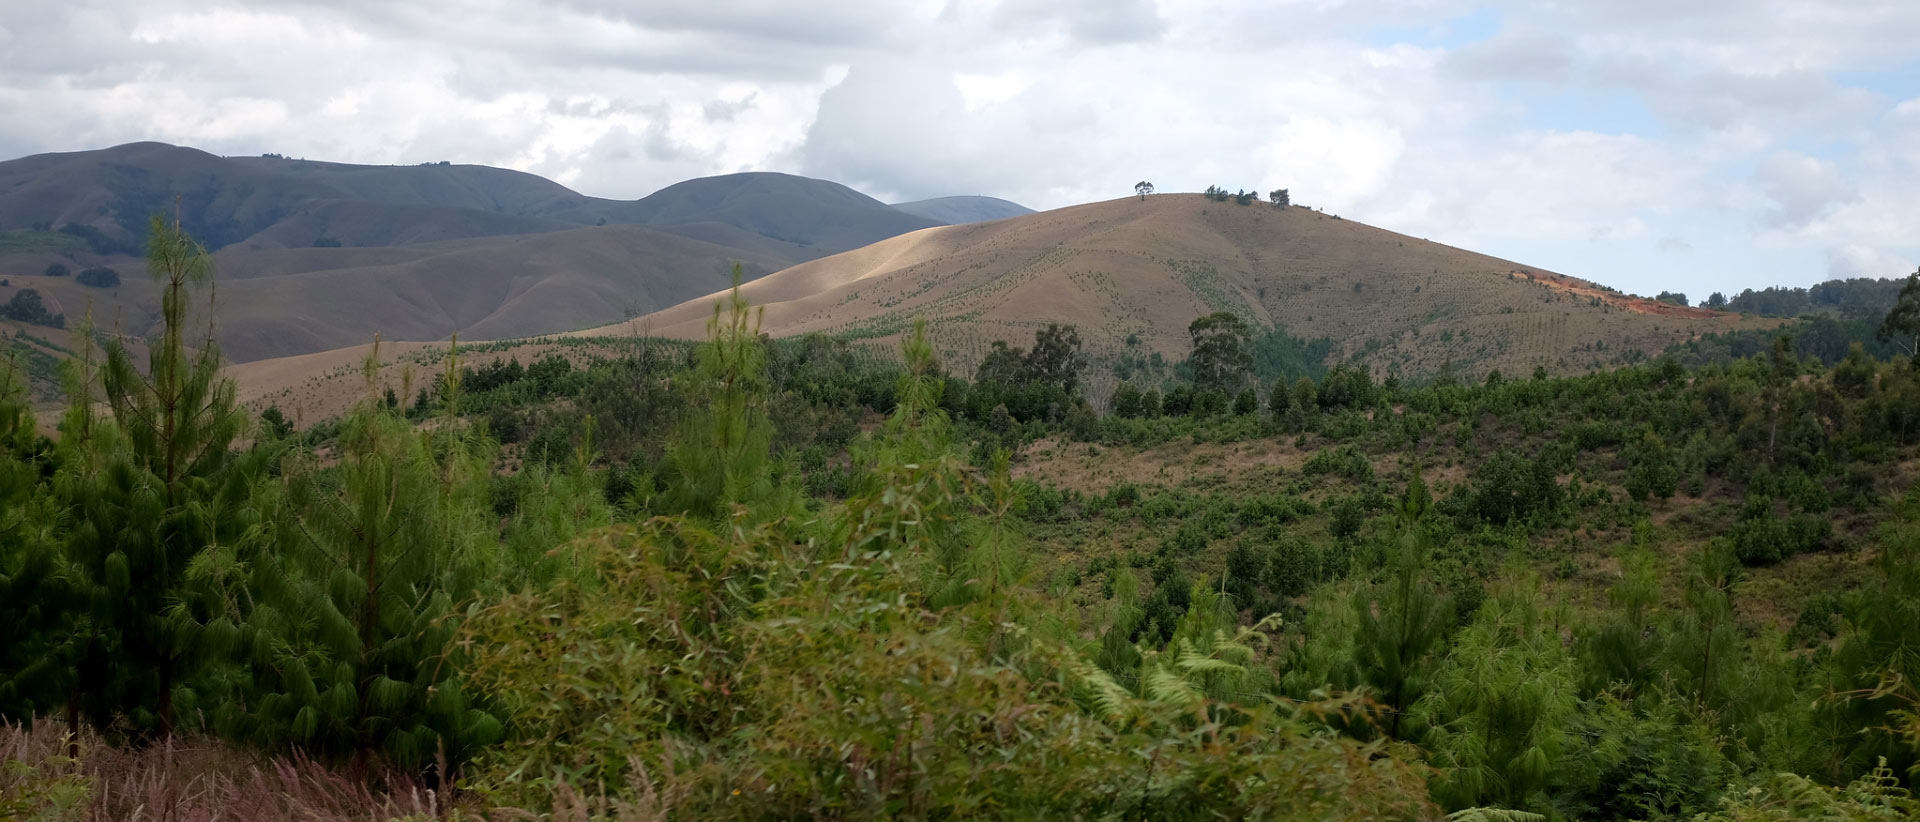 Uporoto, Kipengere and Livingstone Ranges